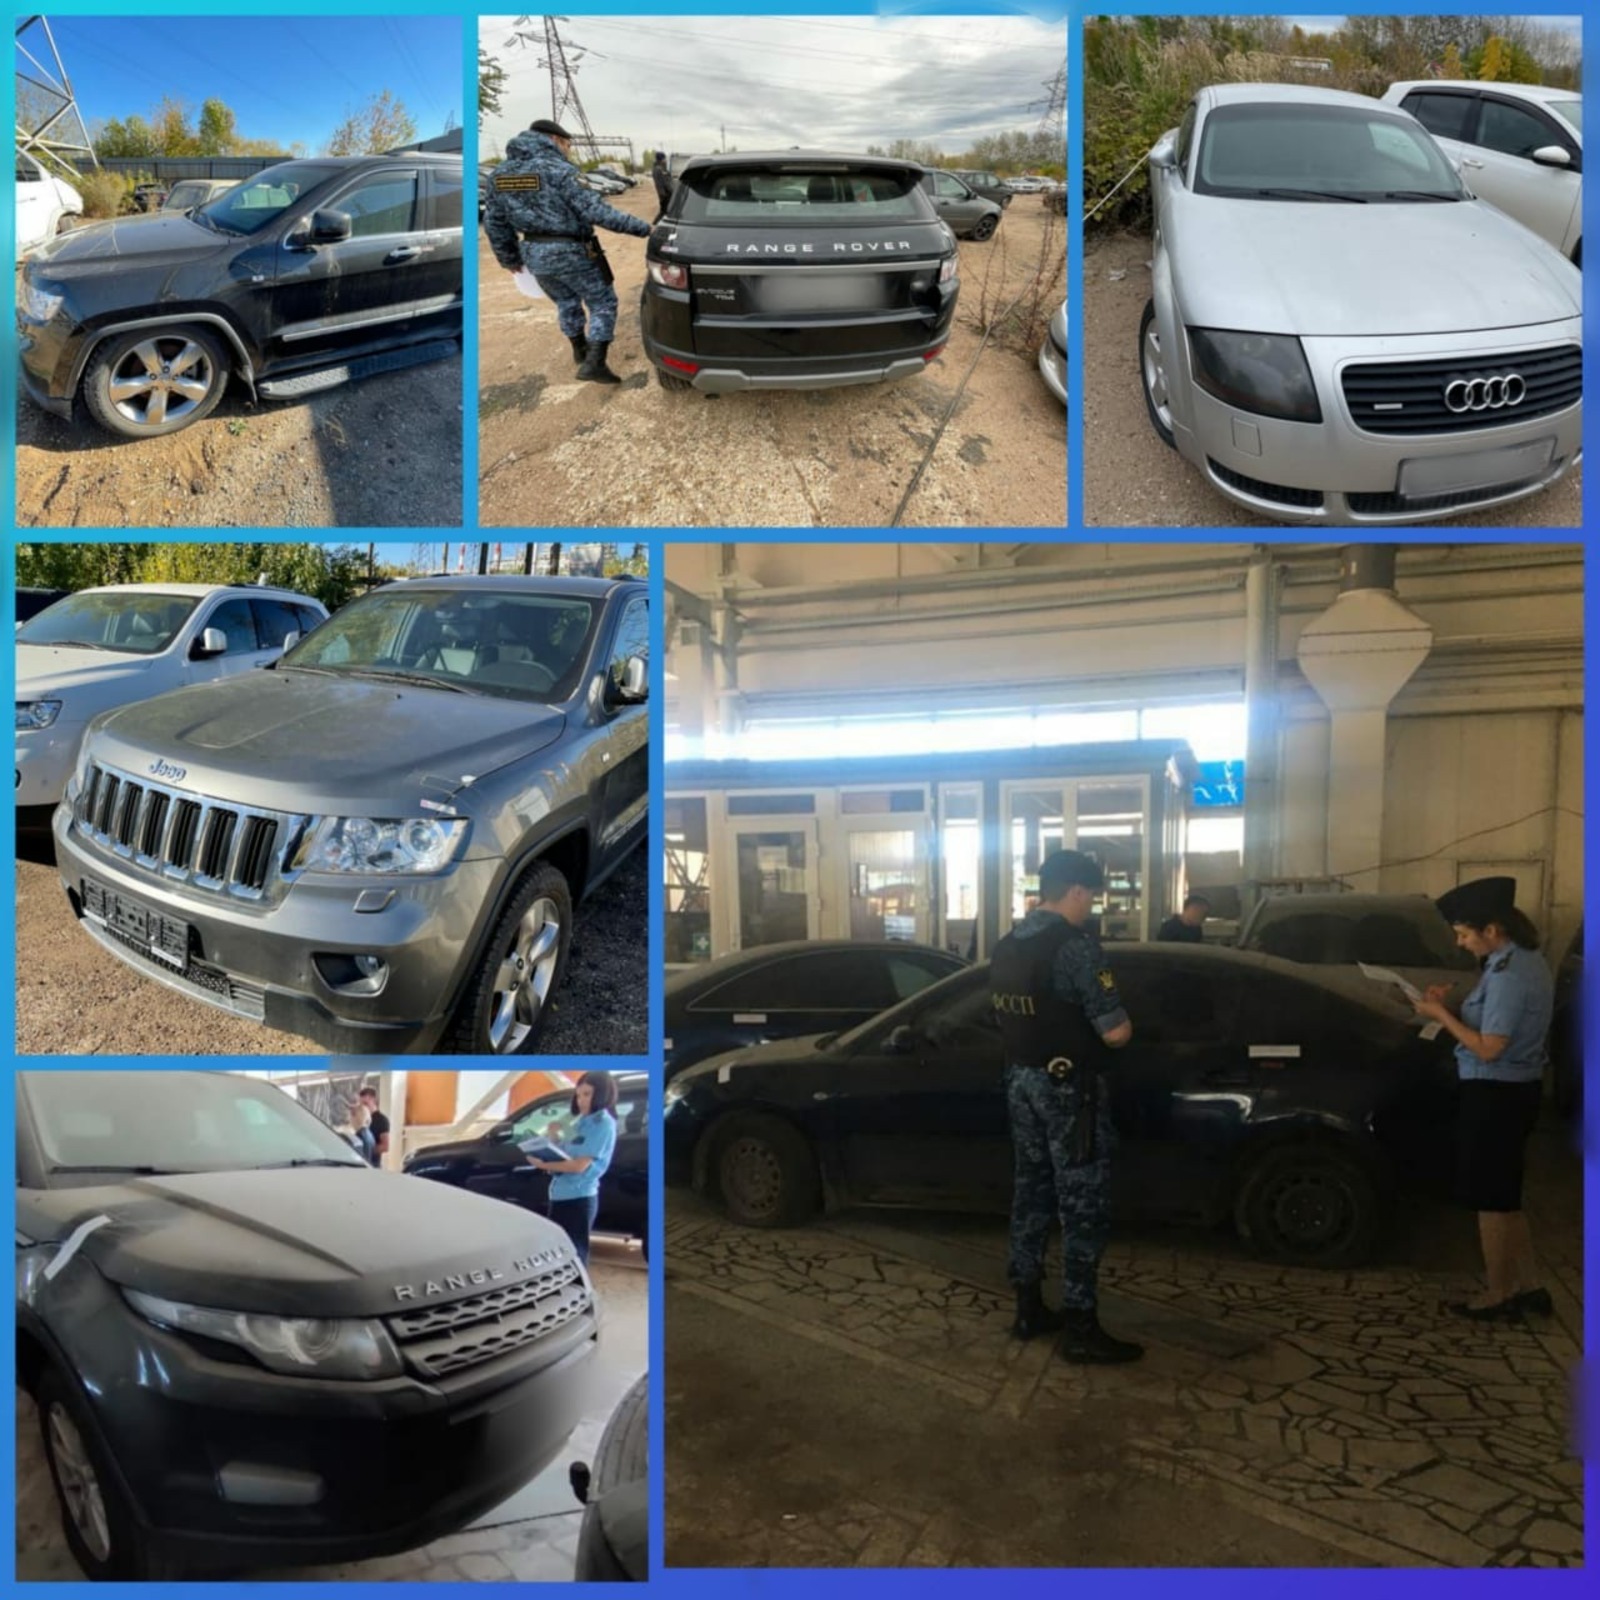 Toyota Porte, Jeep Grand Cherokee, Volkswagen Toureg… Какие автомобили арестованы у жителей Башкирии и уйдут с молотка